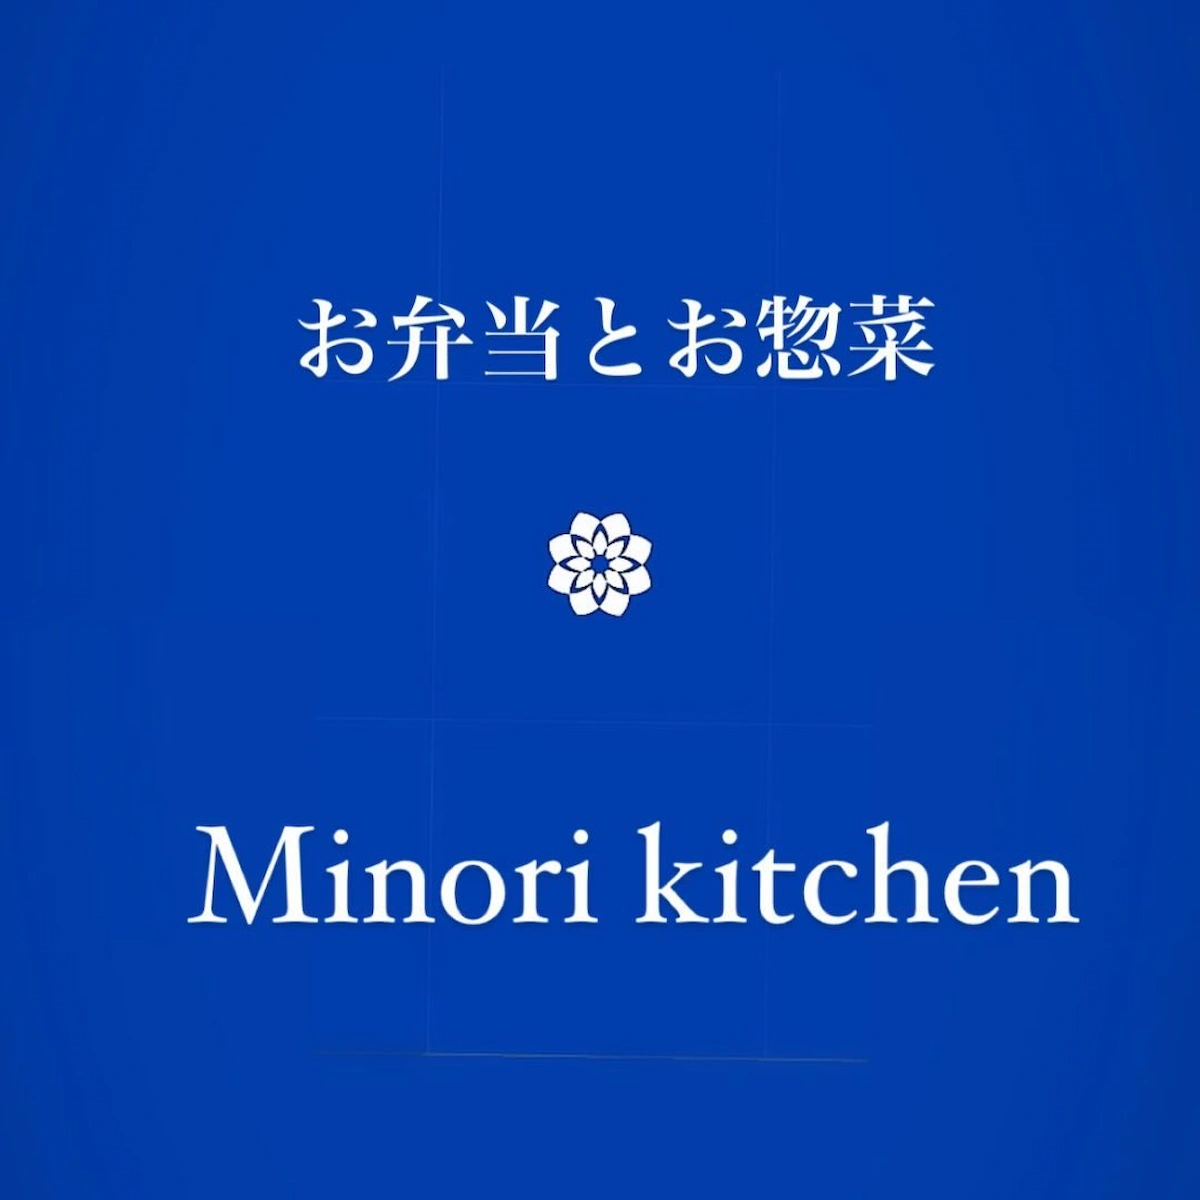 Minori kitchenが2月24日にオープンするみたい。お弁当とお惣菜の店